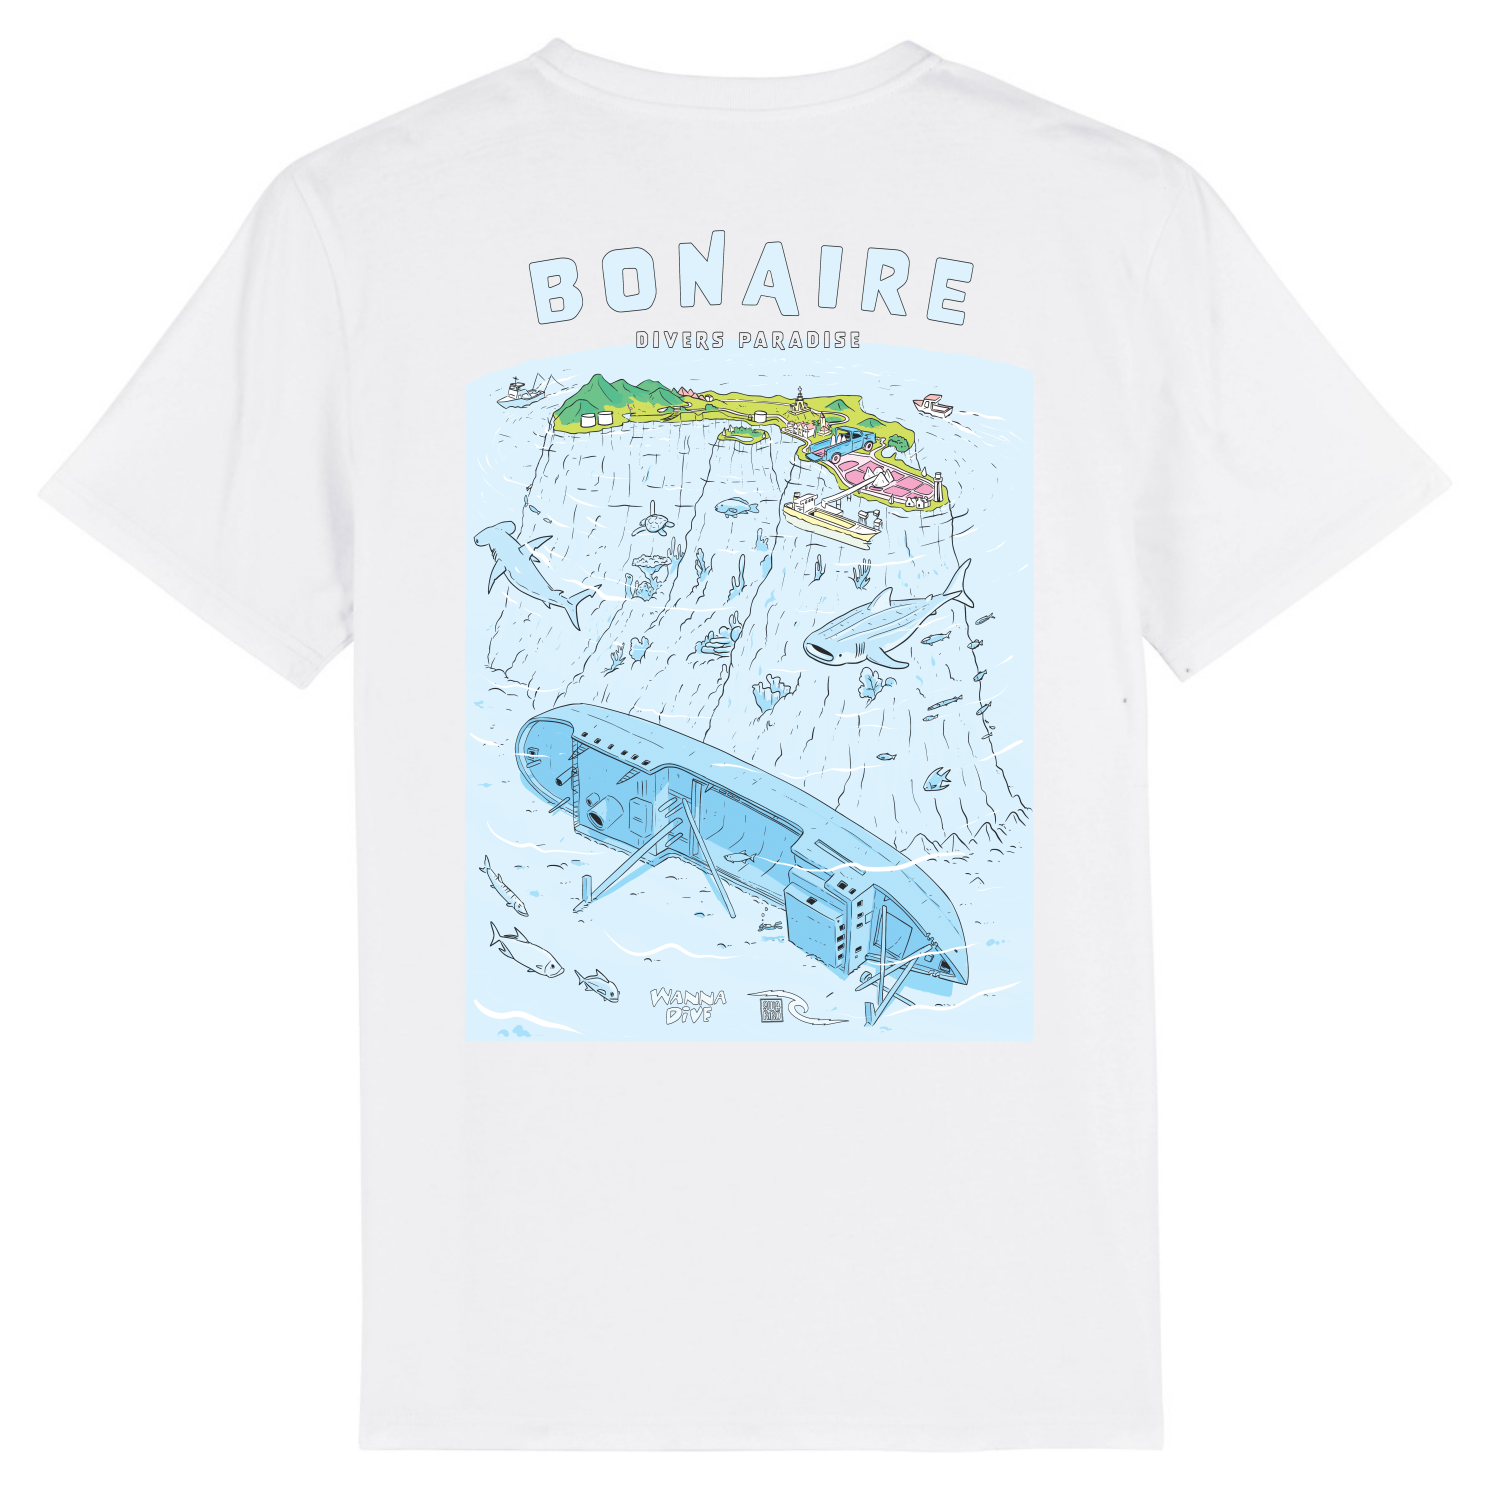 Hilma Hooker, Bonaire Dive Paradise T-shirt